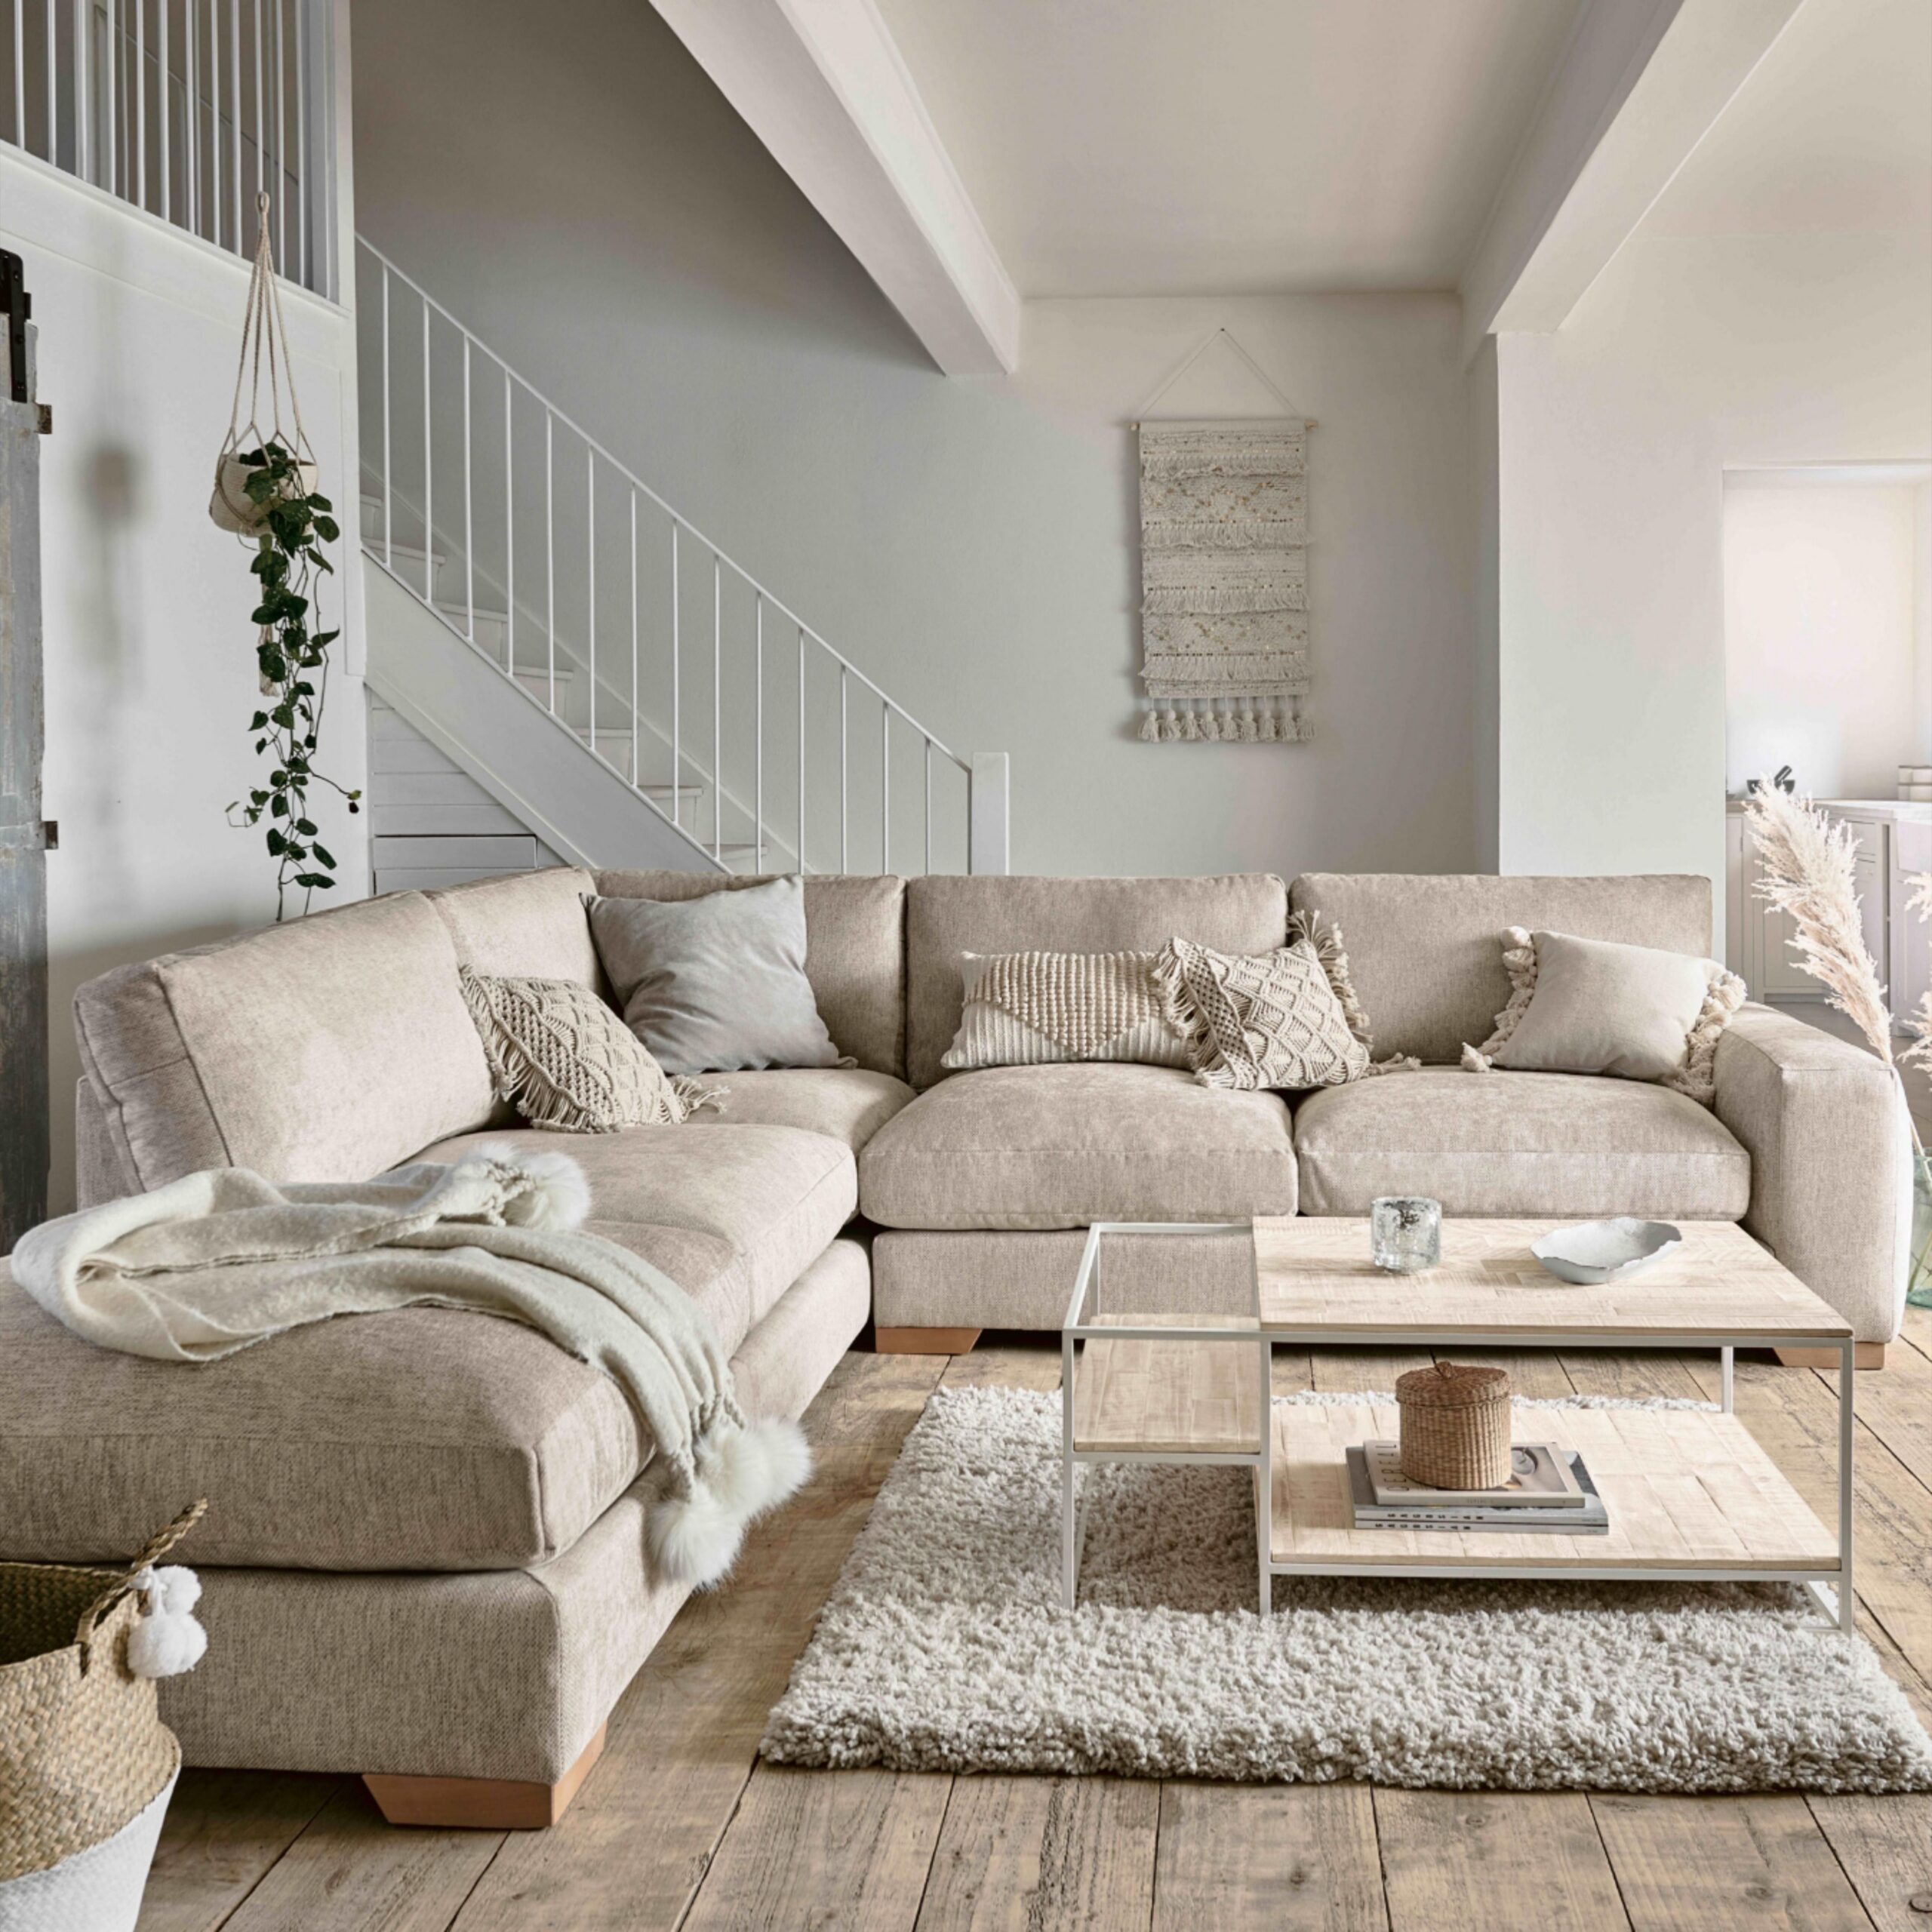 Why Should You Buy a Corner Sofa?